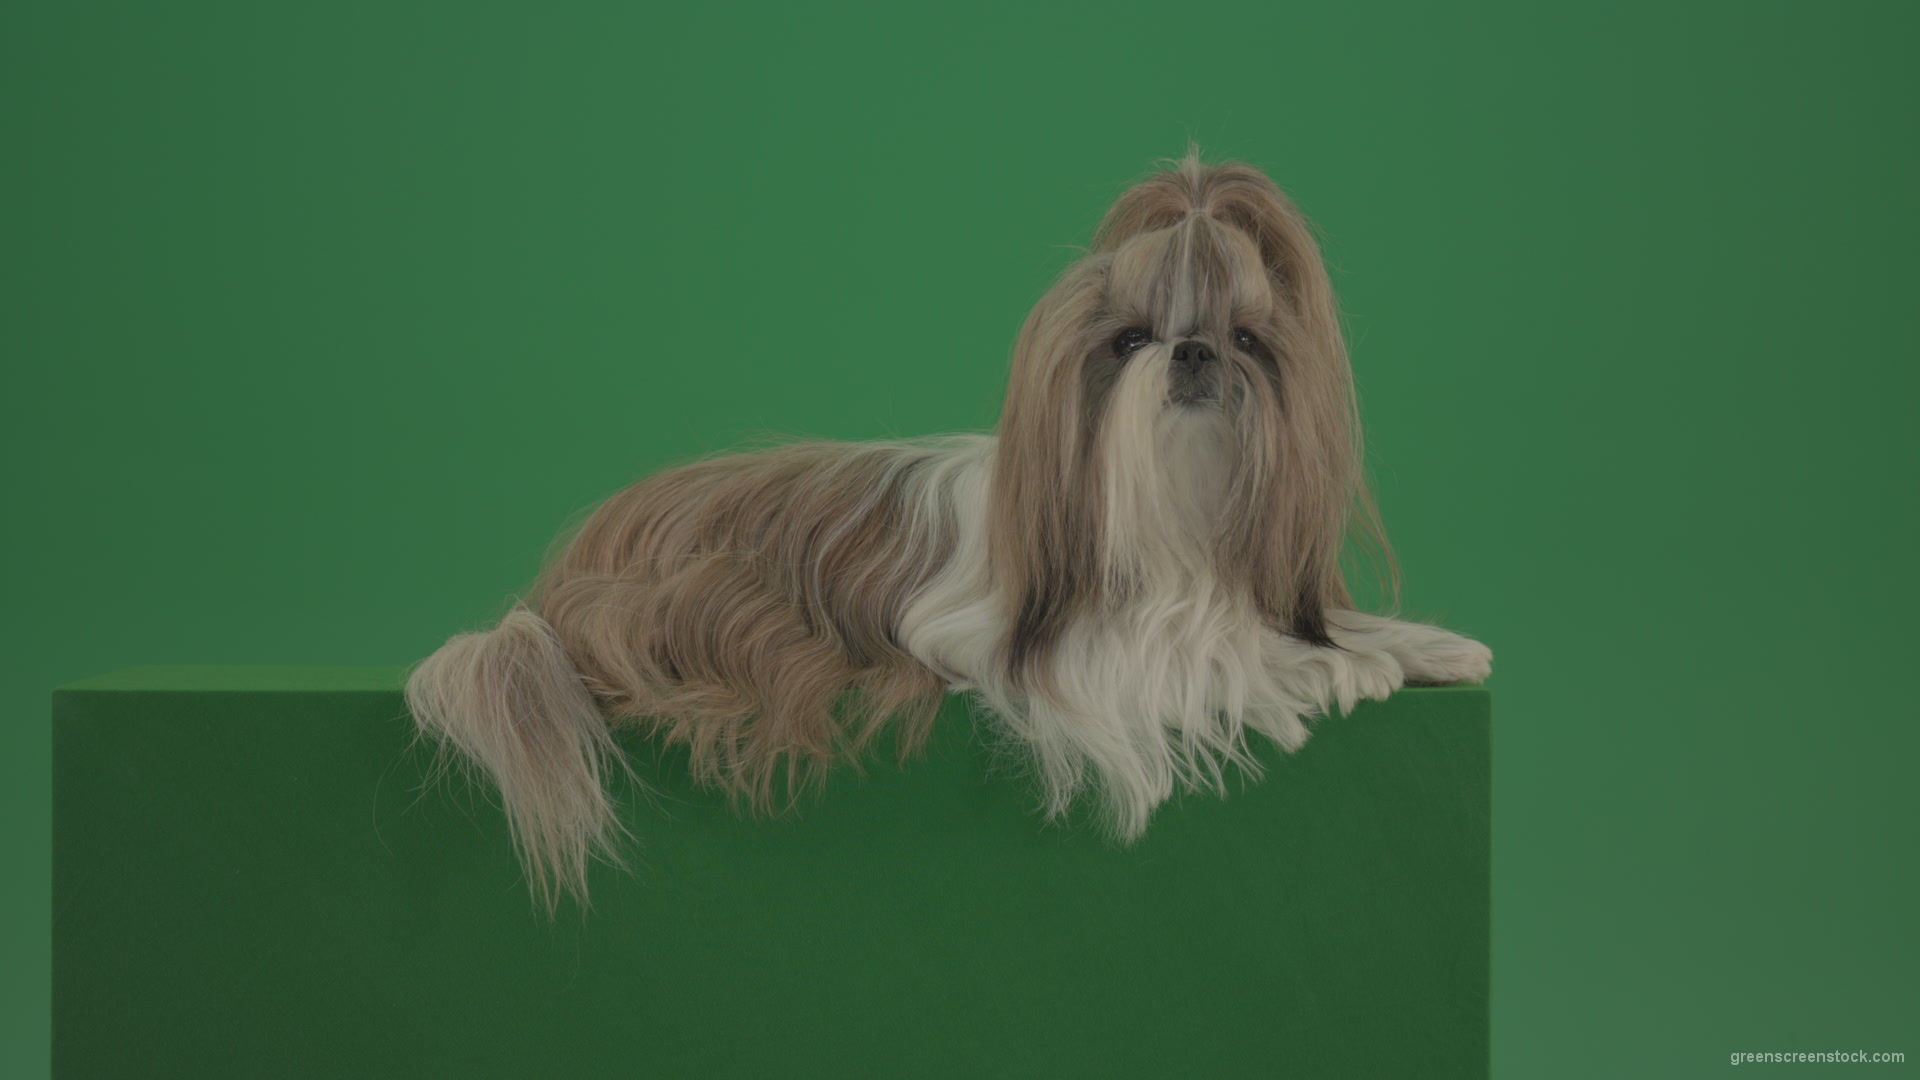 Luxury-bright-hair-Shihtzu-dog-pet-relaxing-on-green-screen-4K_008 Green Screen Stock